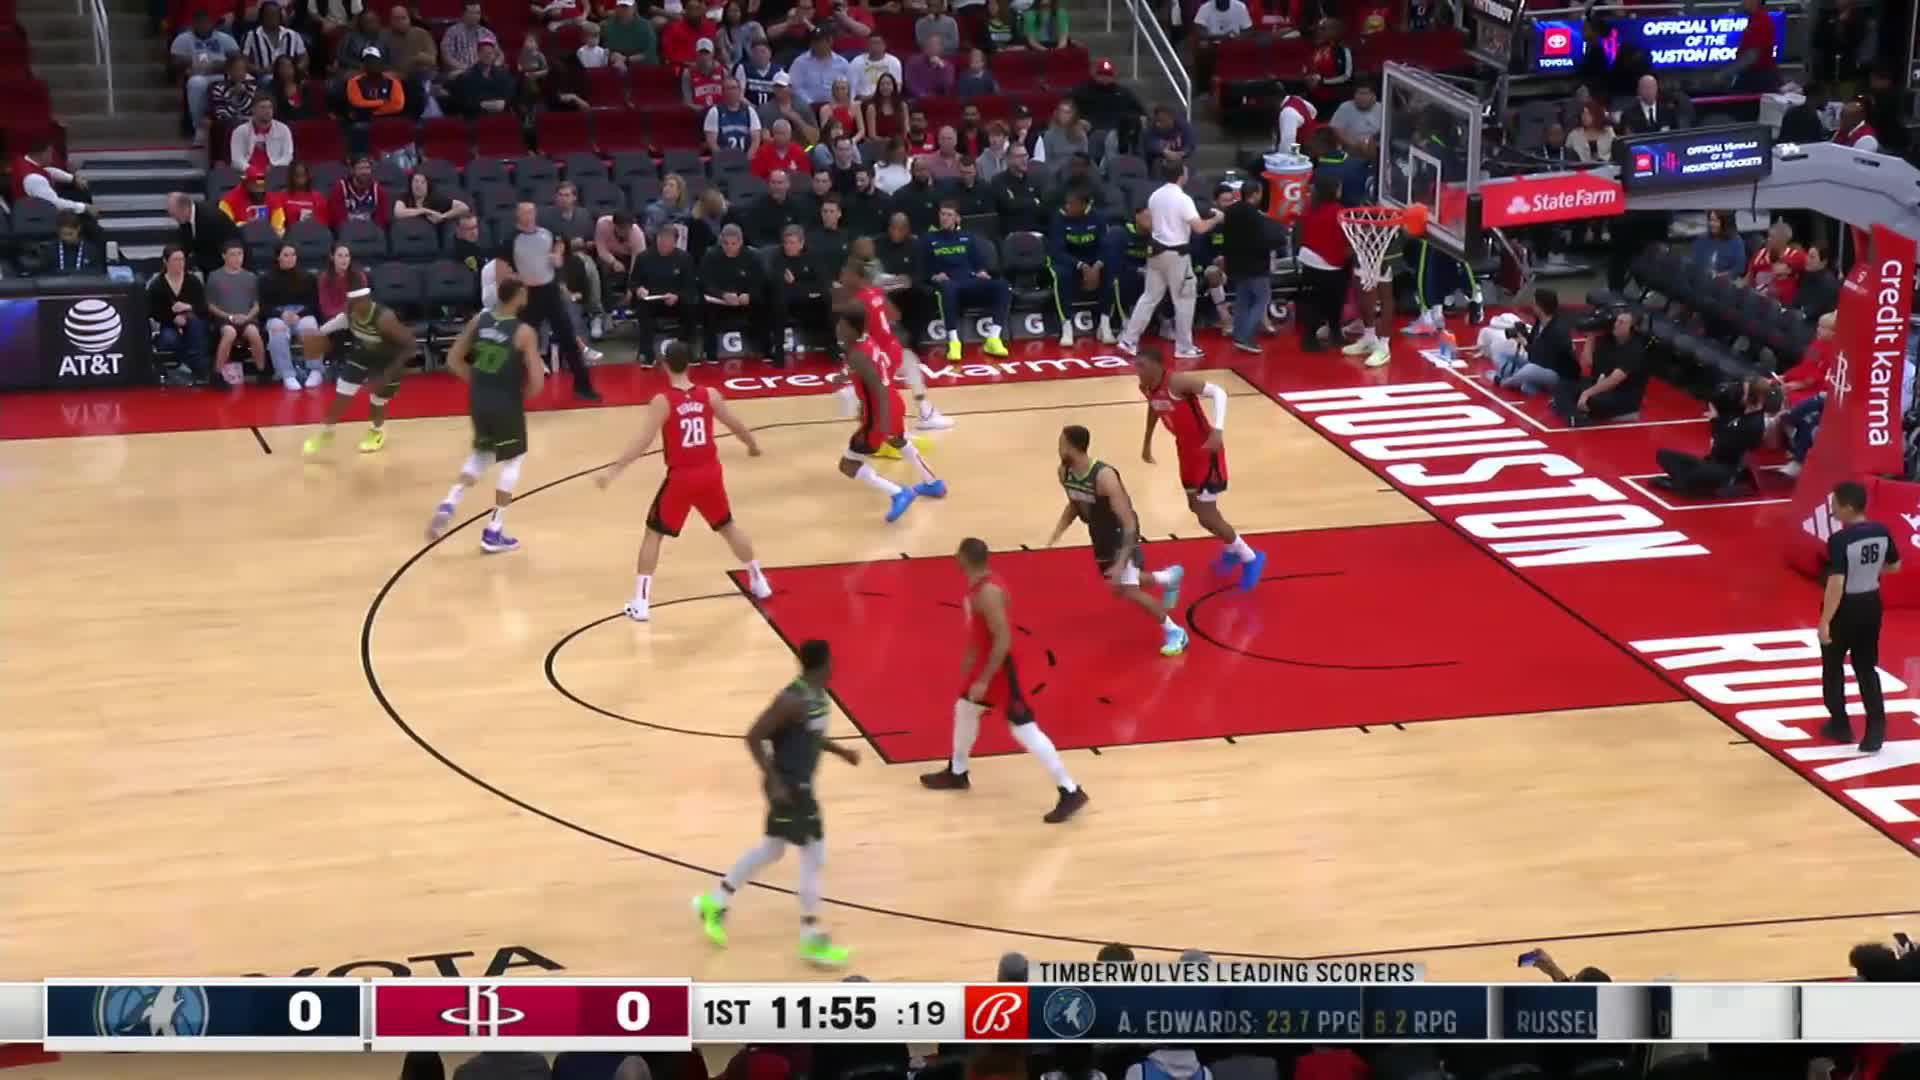 Houston Rockets vs. Minnesota Timberwolves game preview - The Dream Shake